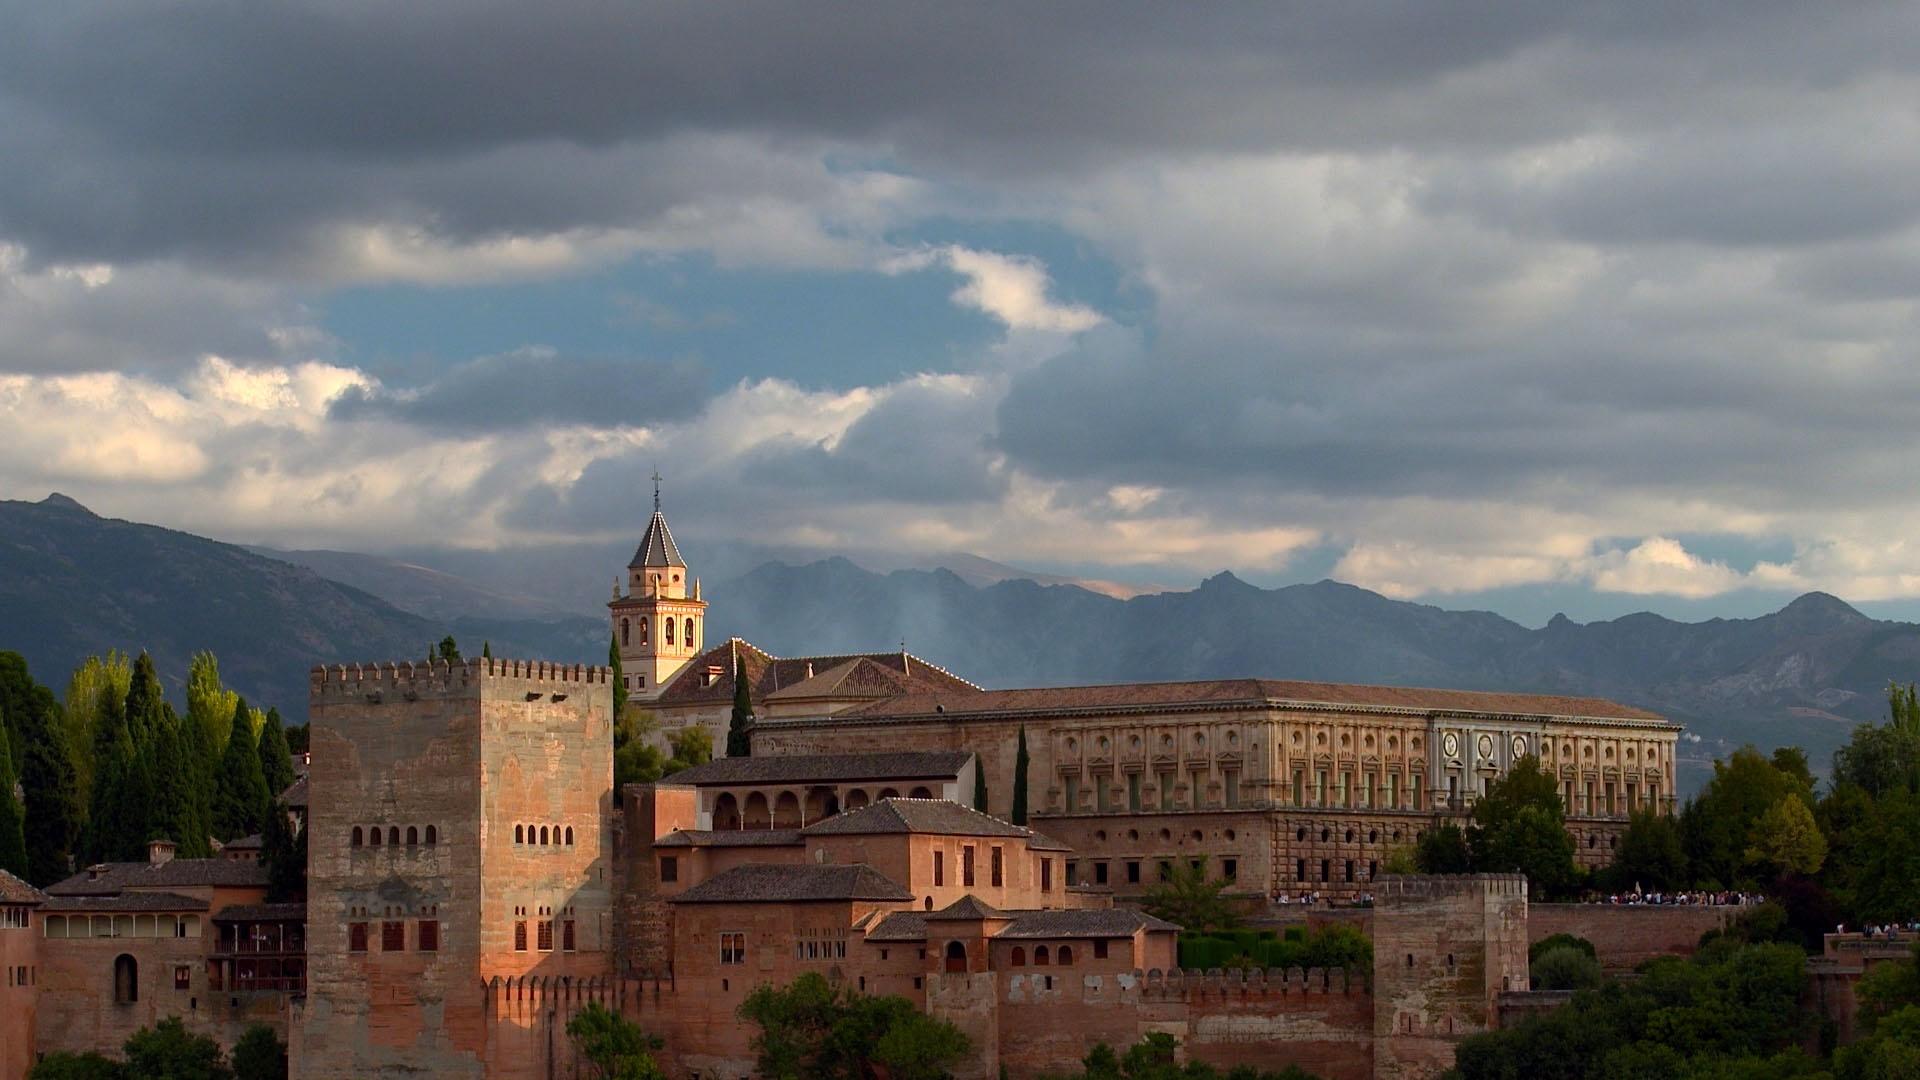 Image of the Alhambra in Granada Spain